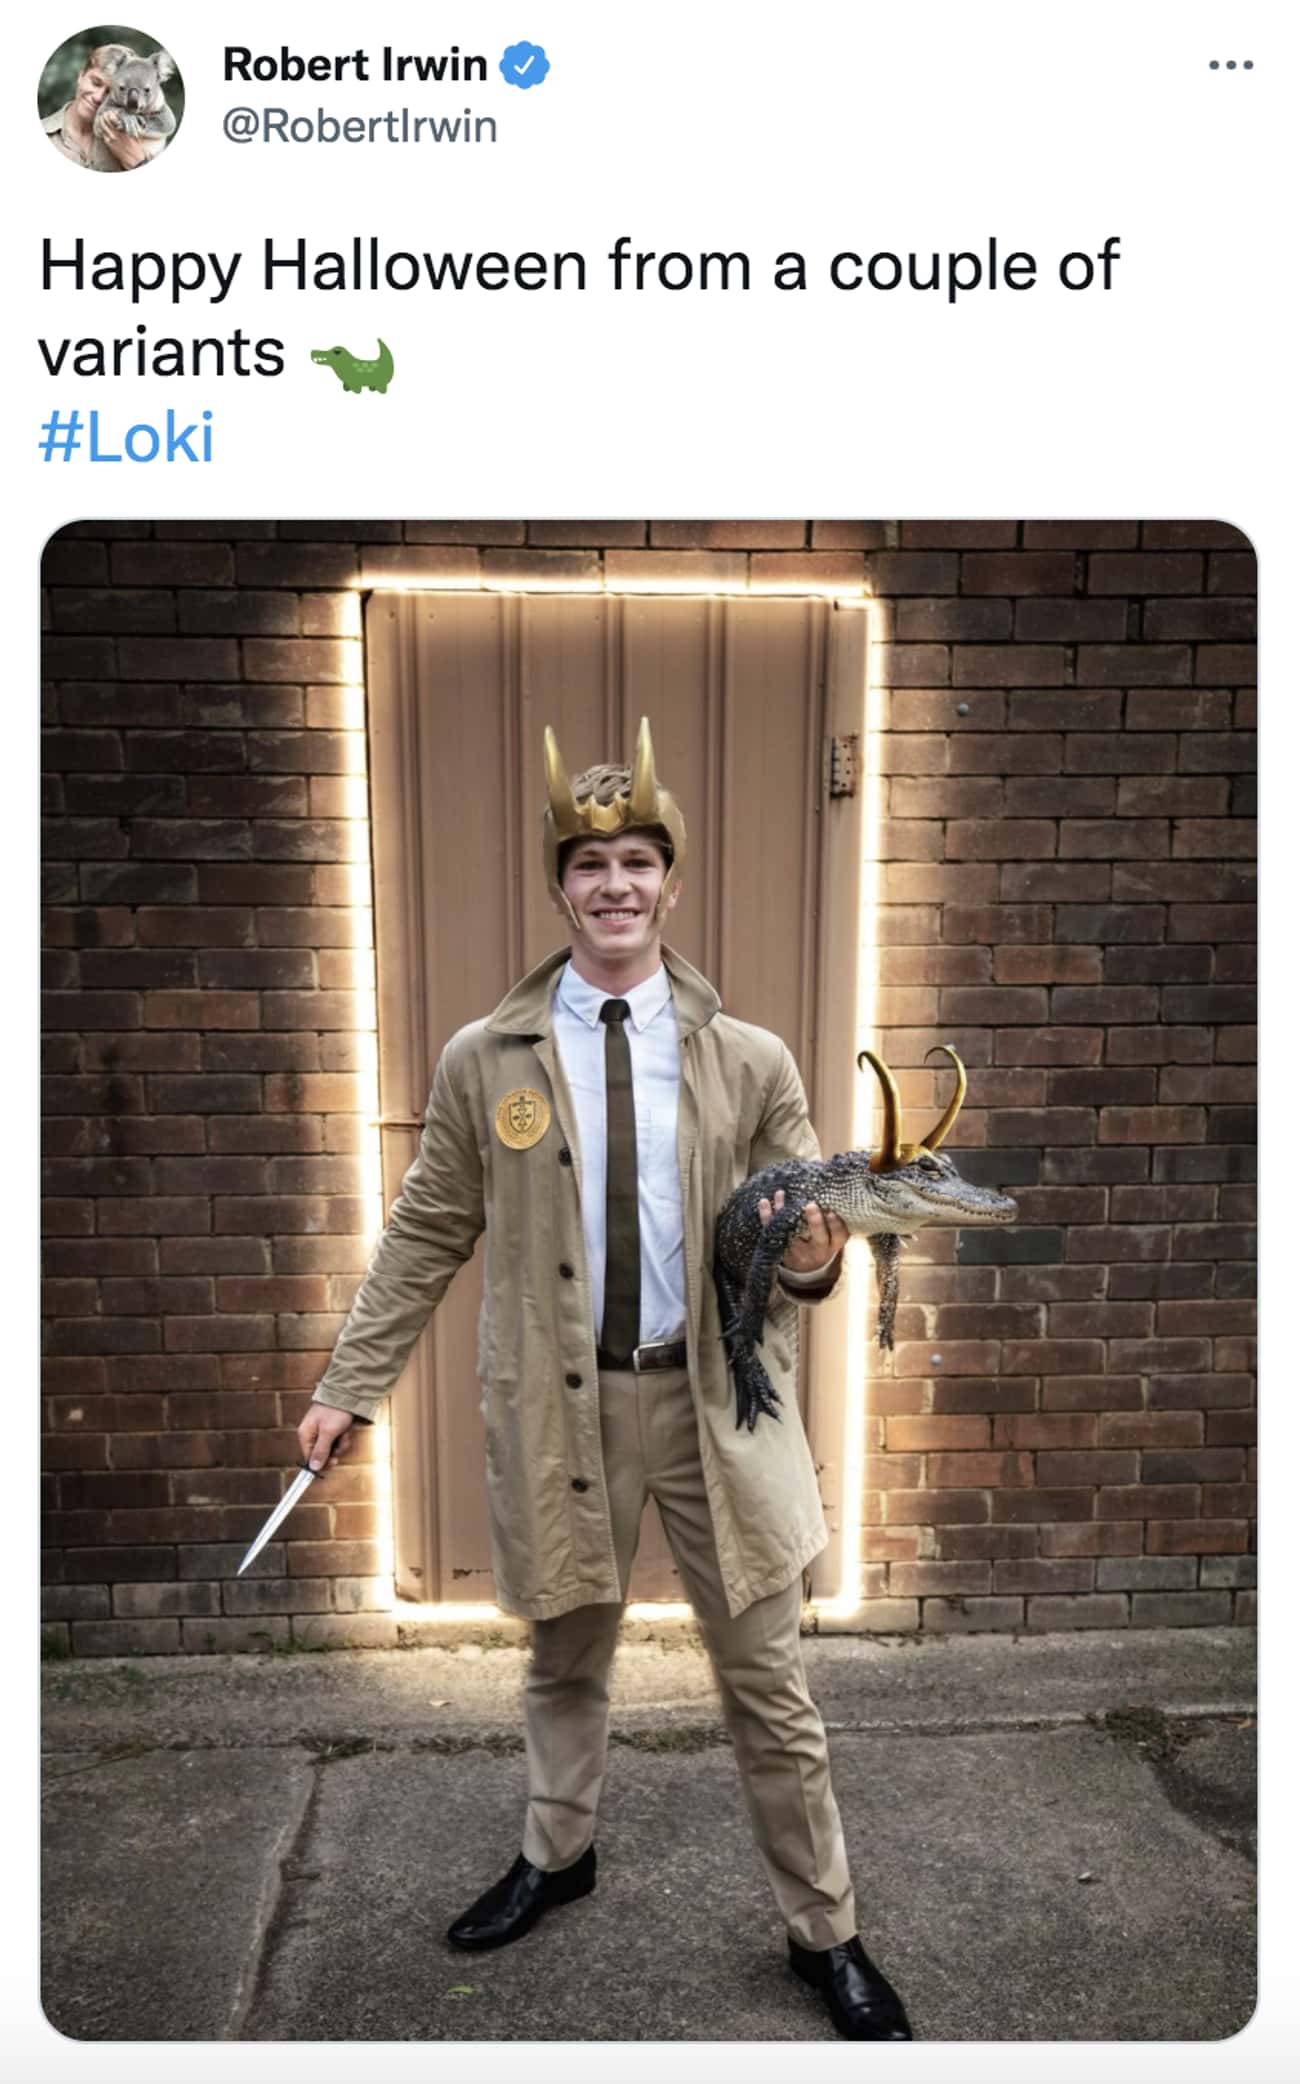 Robert Irwin Nails His 'Loki' Halloween Costume